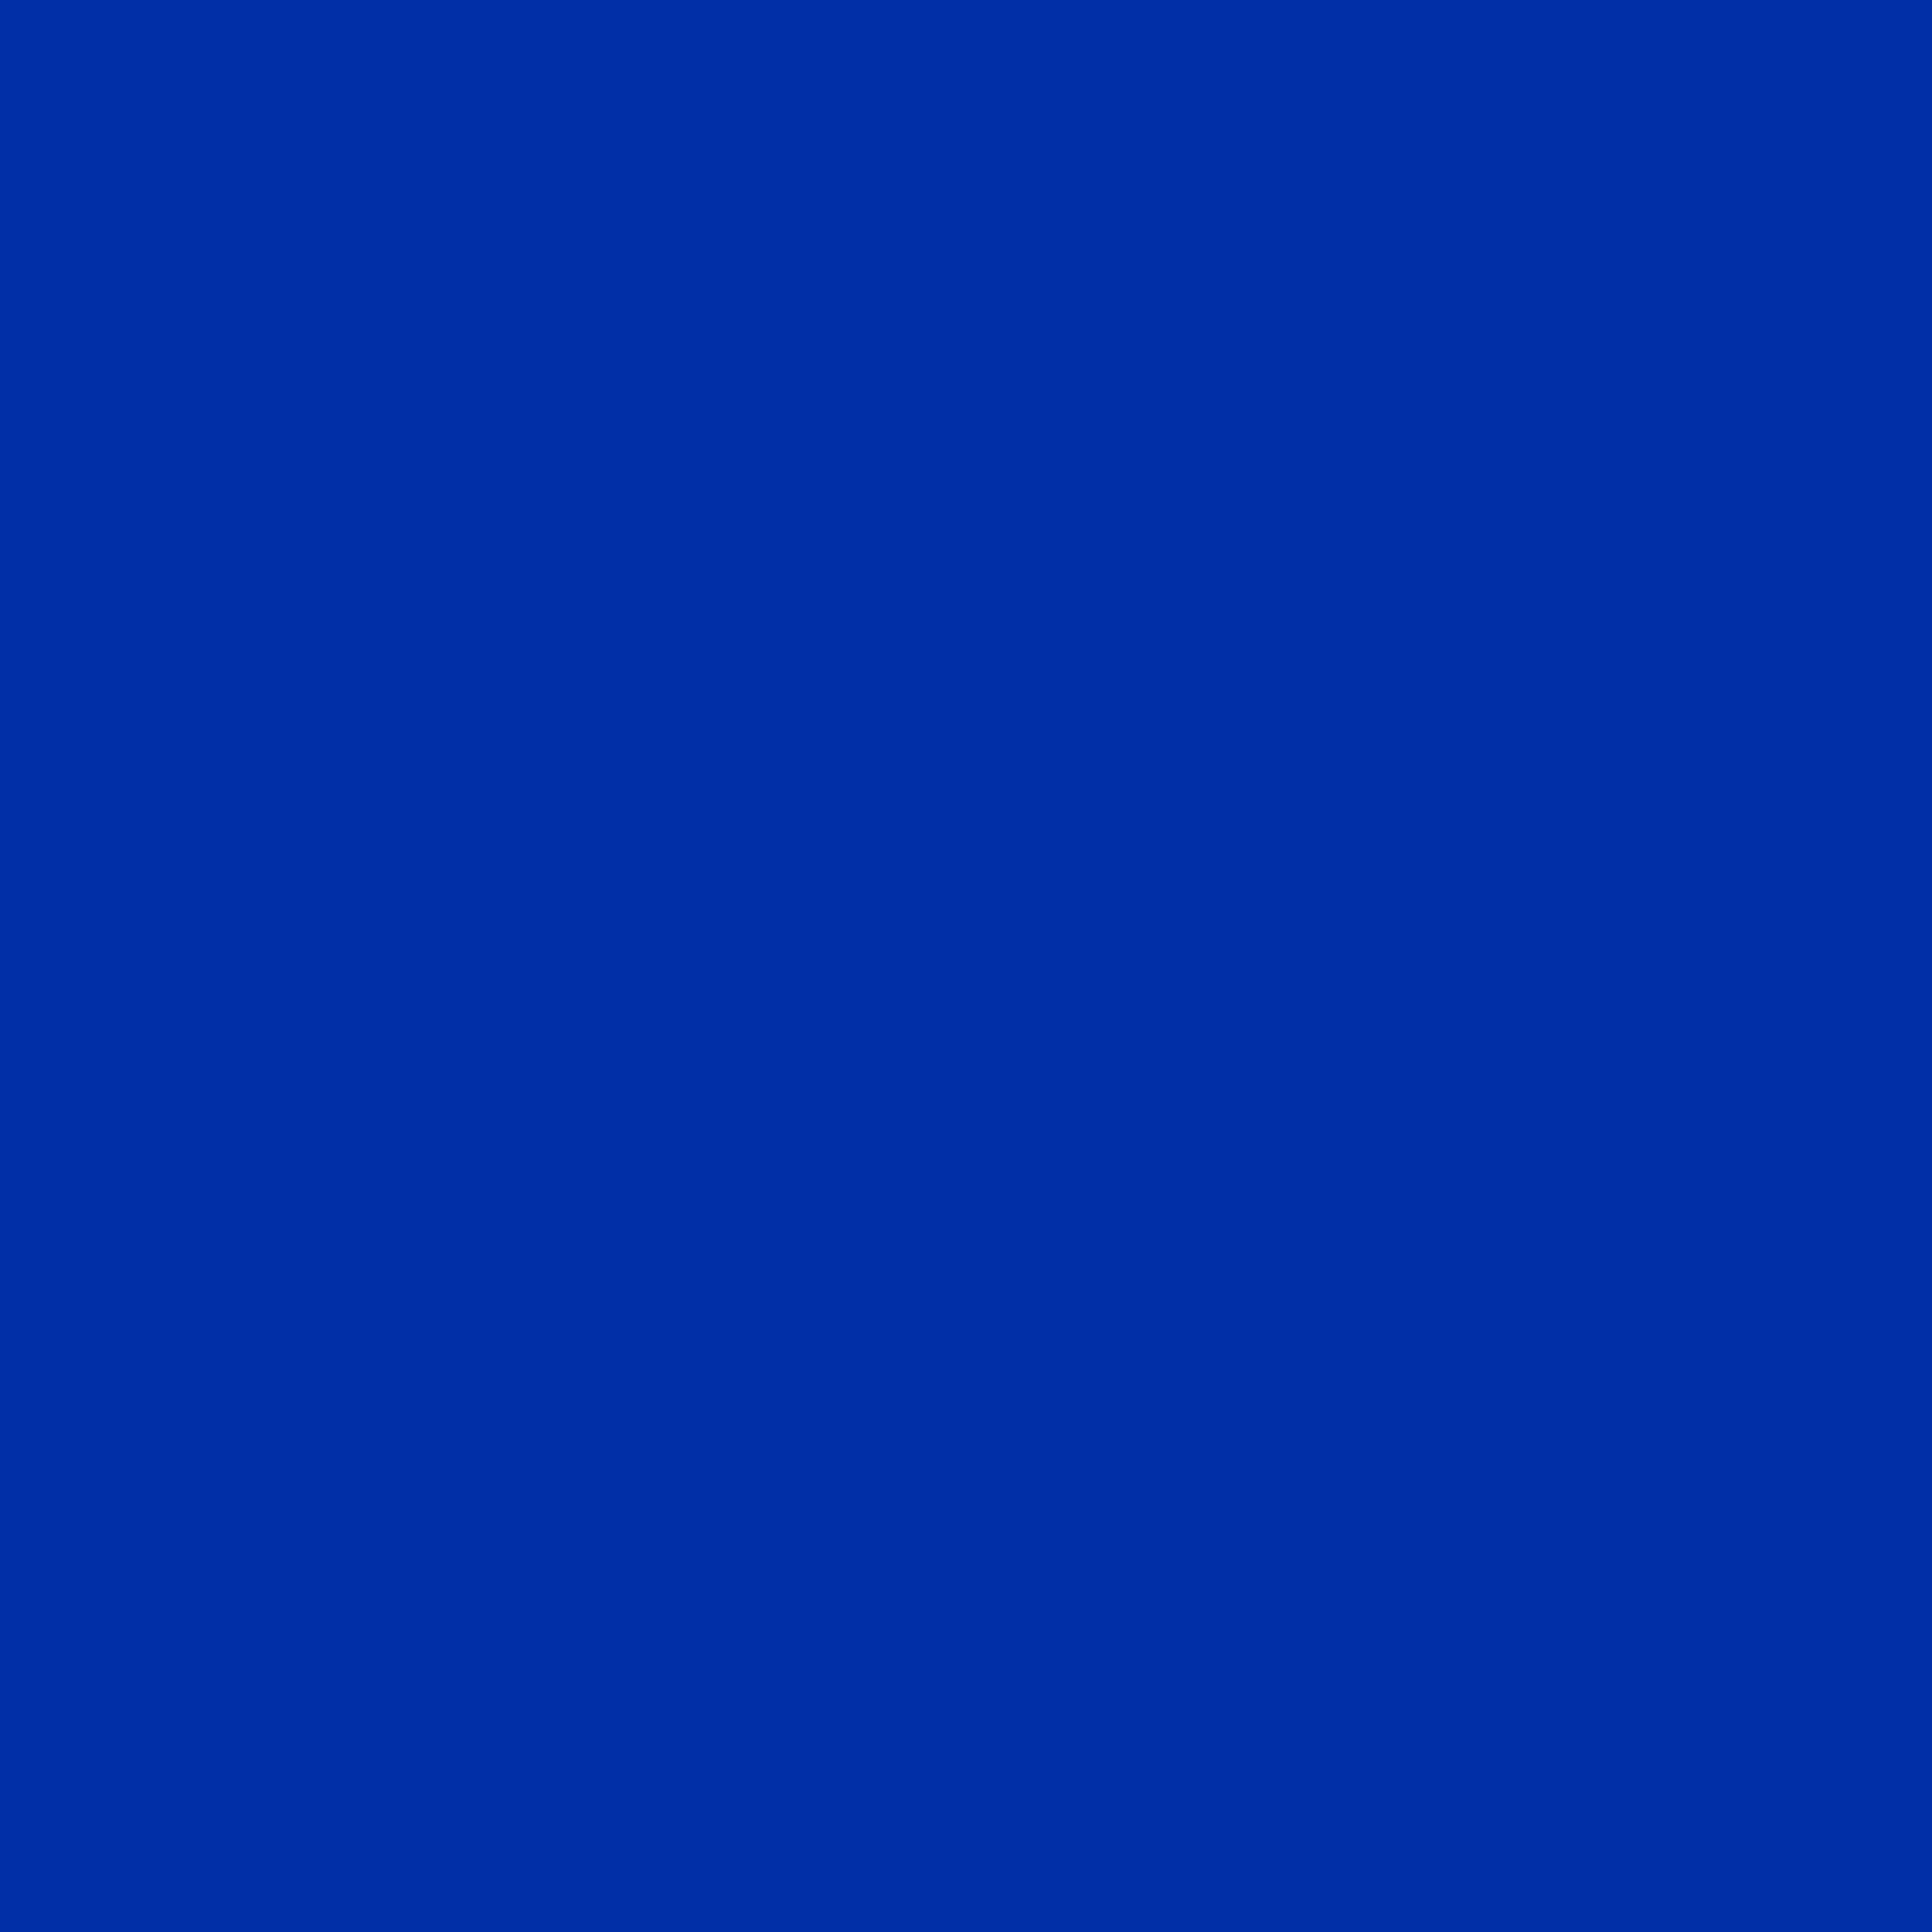 3600x3600 International Klein Blue Solid Color Background